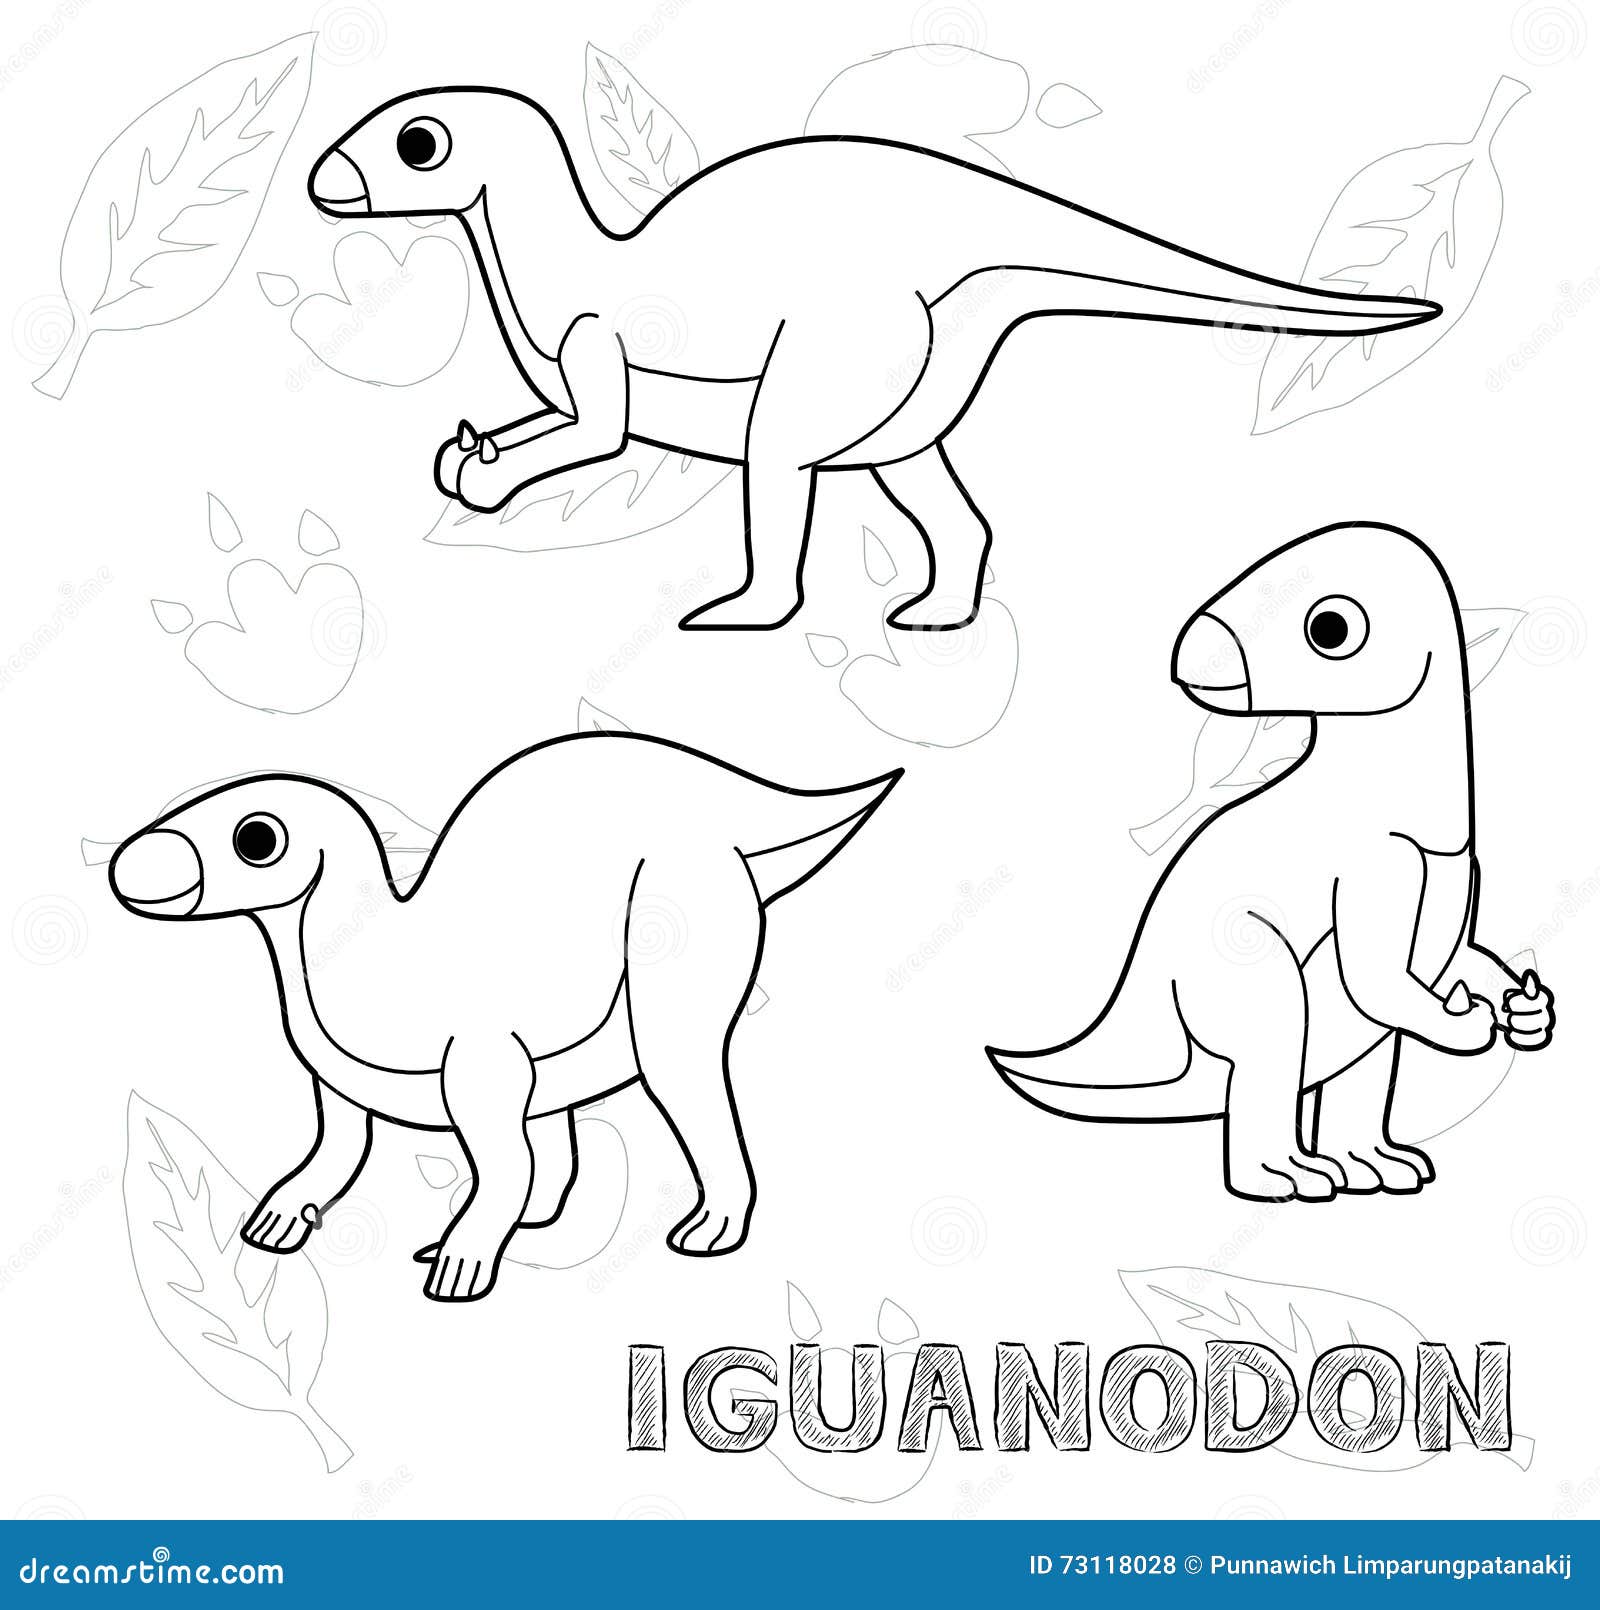 voice tournament Endurance Dinosaur Iguanodon Cartoon Vector Illustration Monochrome Stock Vector -  Illustration of cartoon, thumb: 73118028